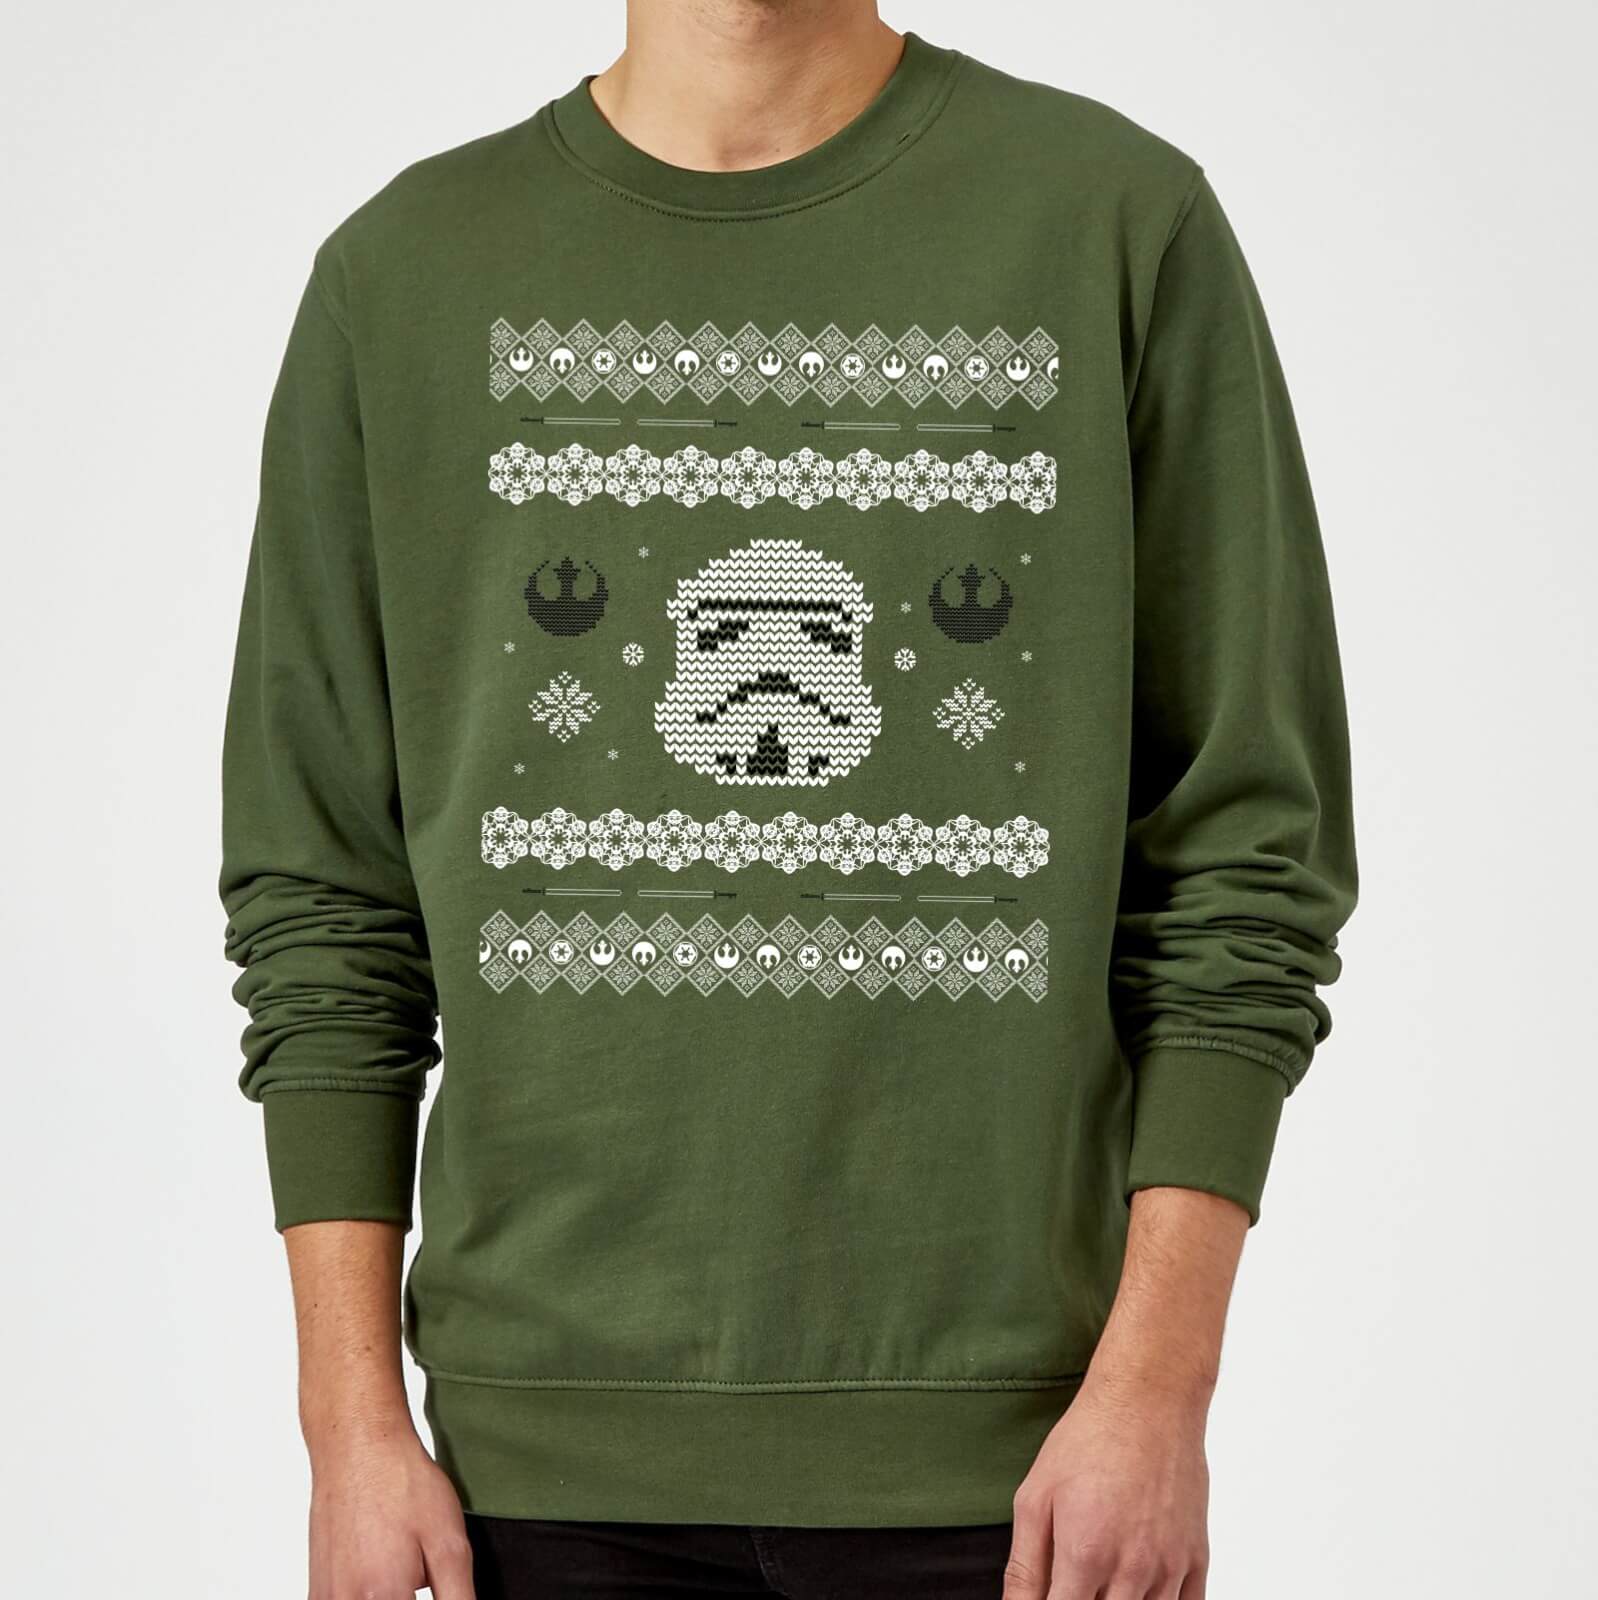 Star Wars Christmas Stormtrooper Knit Green Christmas Sweatshirt - M - Green